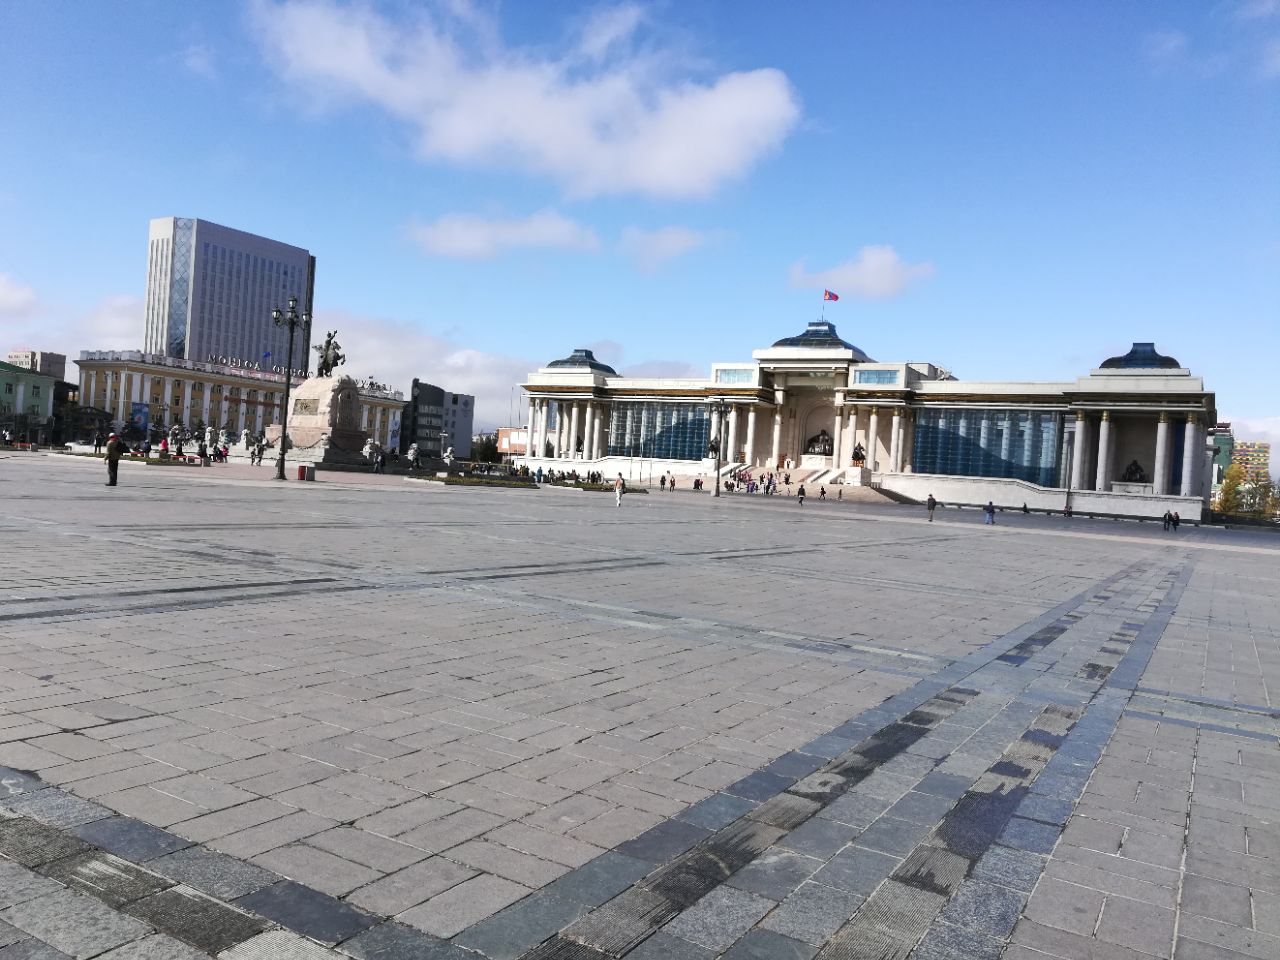 成吉思汗广场chinggis khaan square